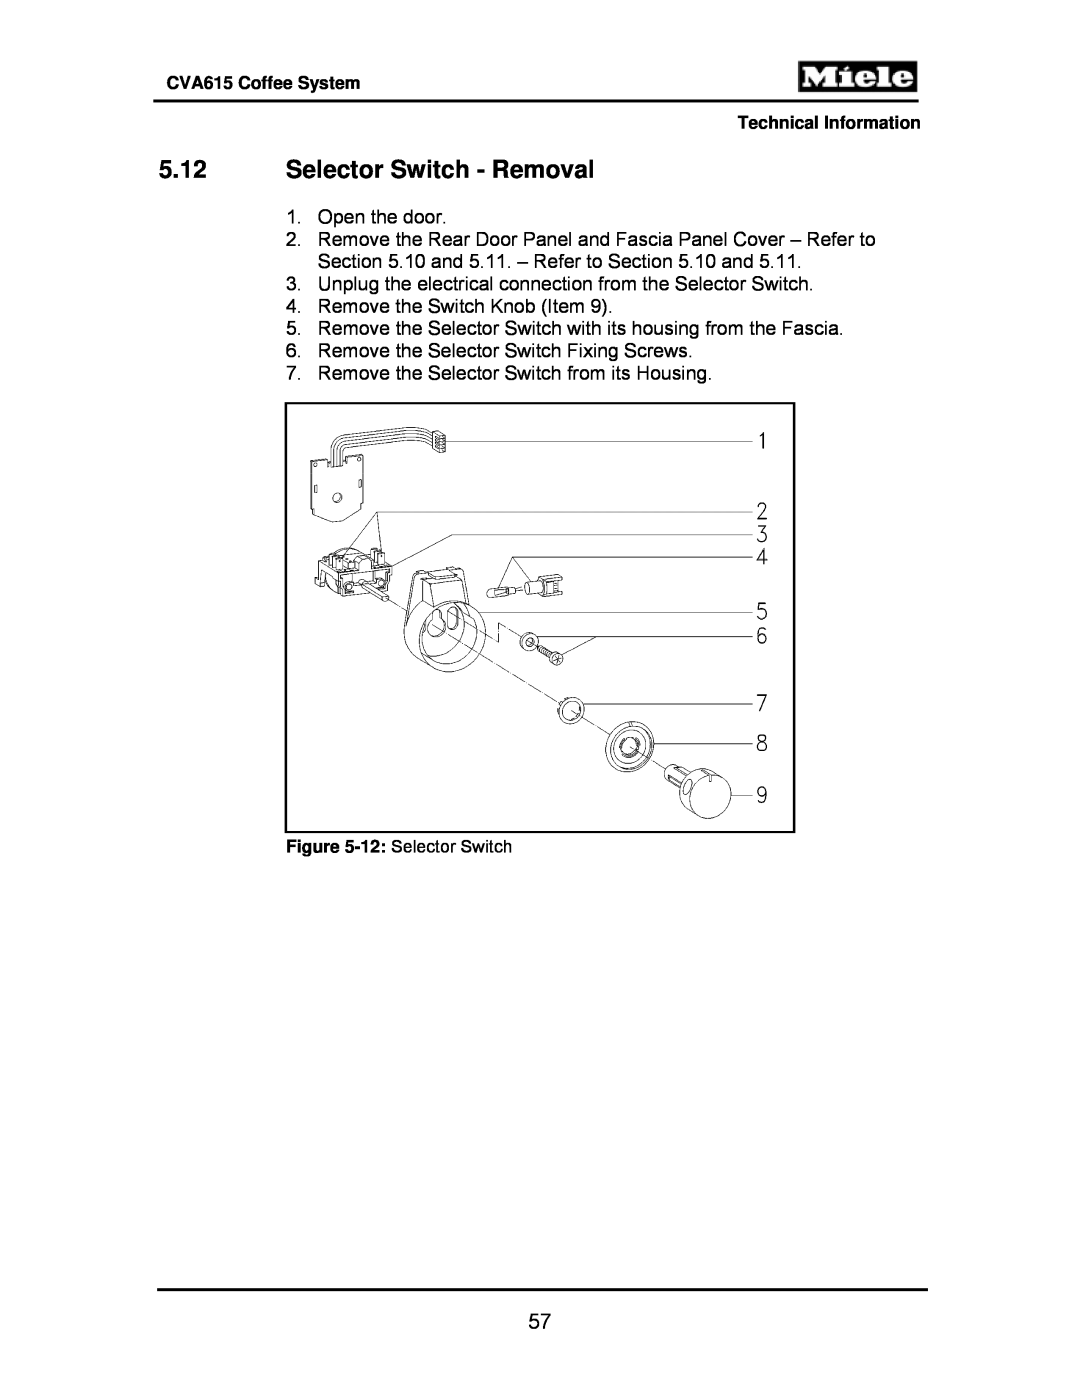 Miele CVA615 manual 5.12Selector Switch - Removal 